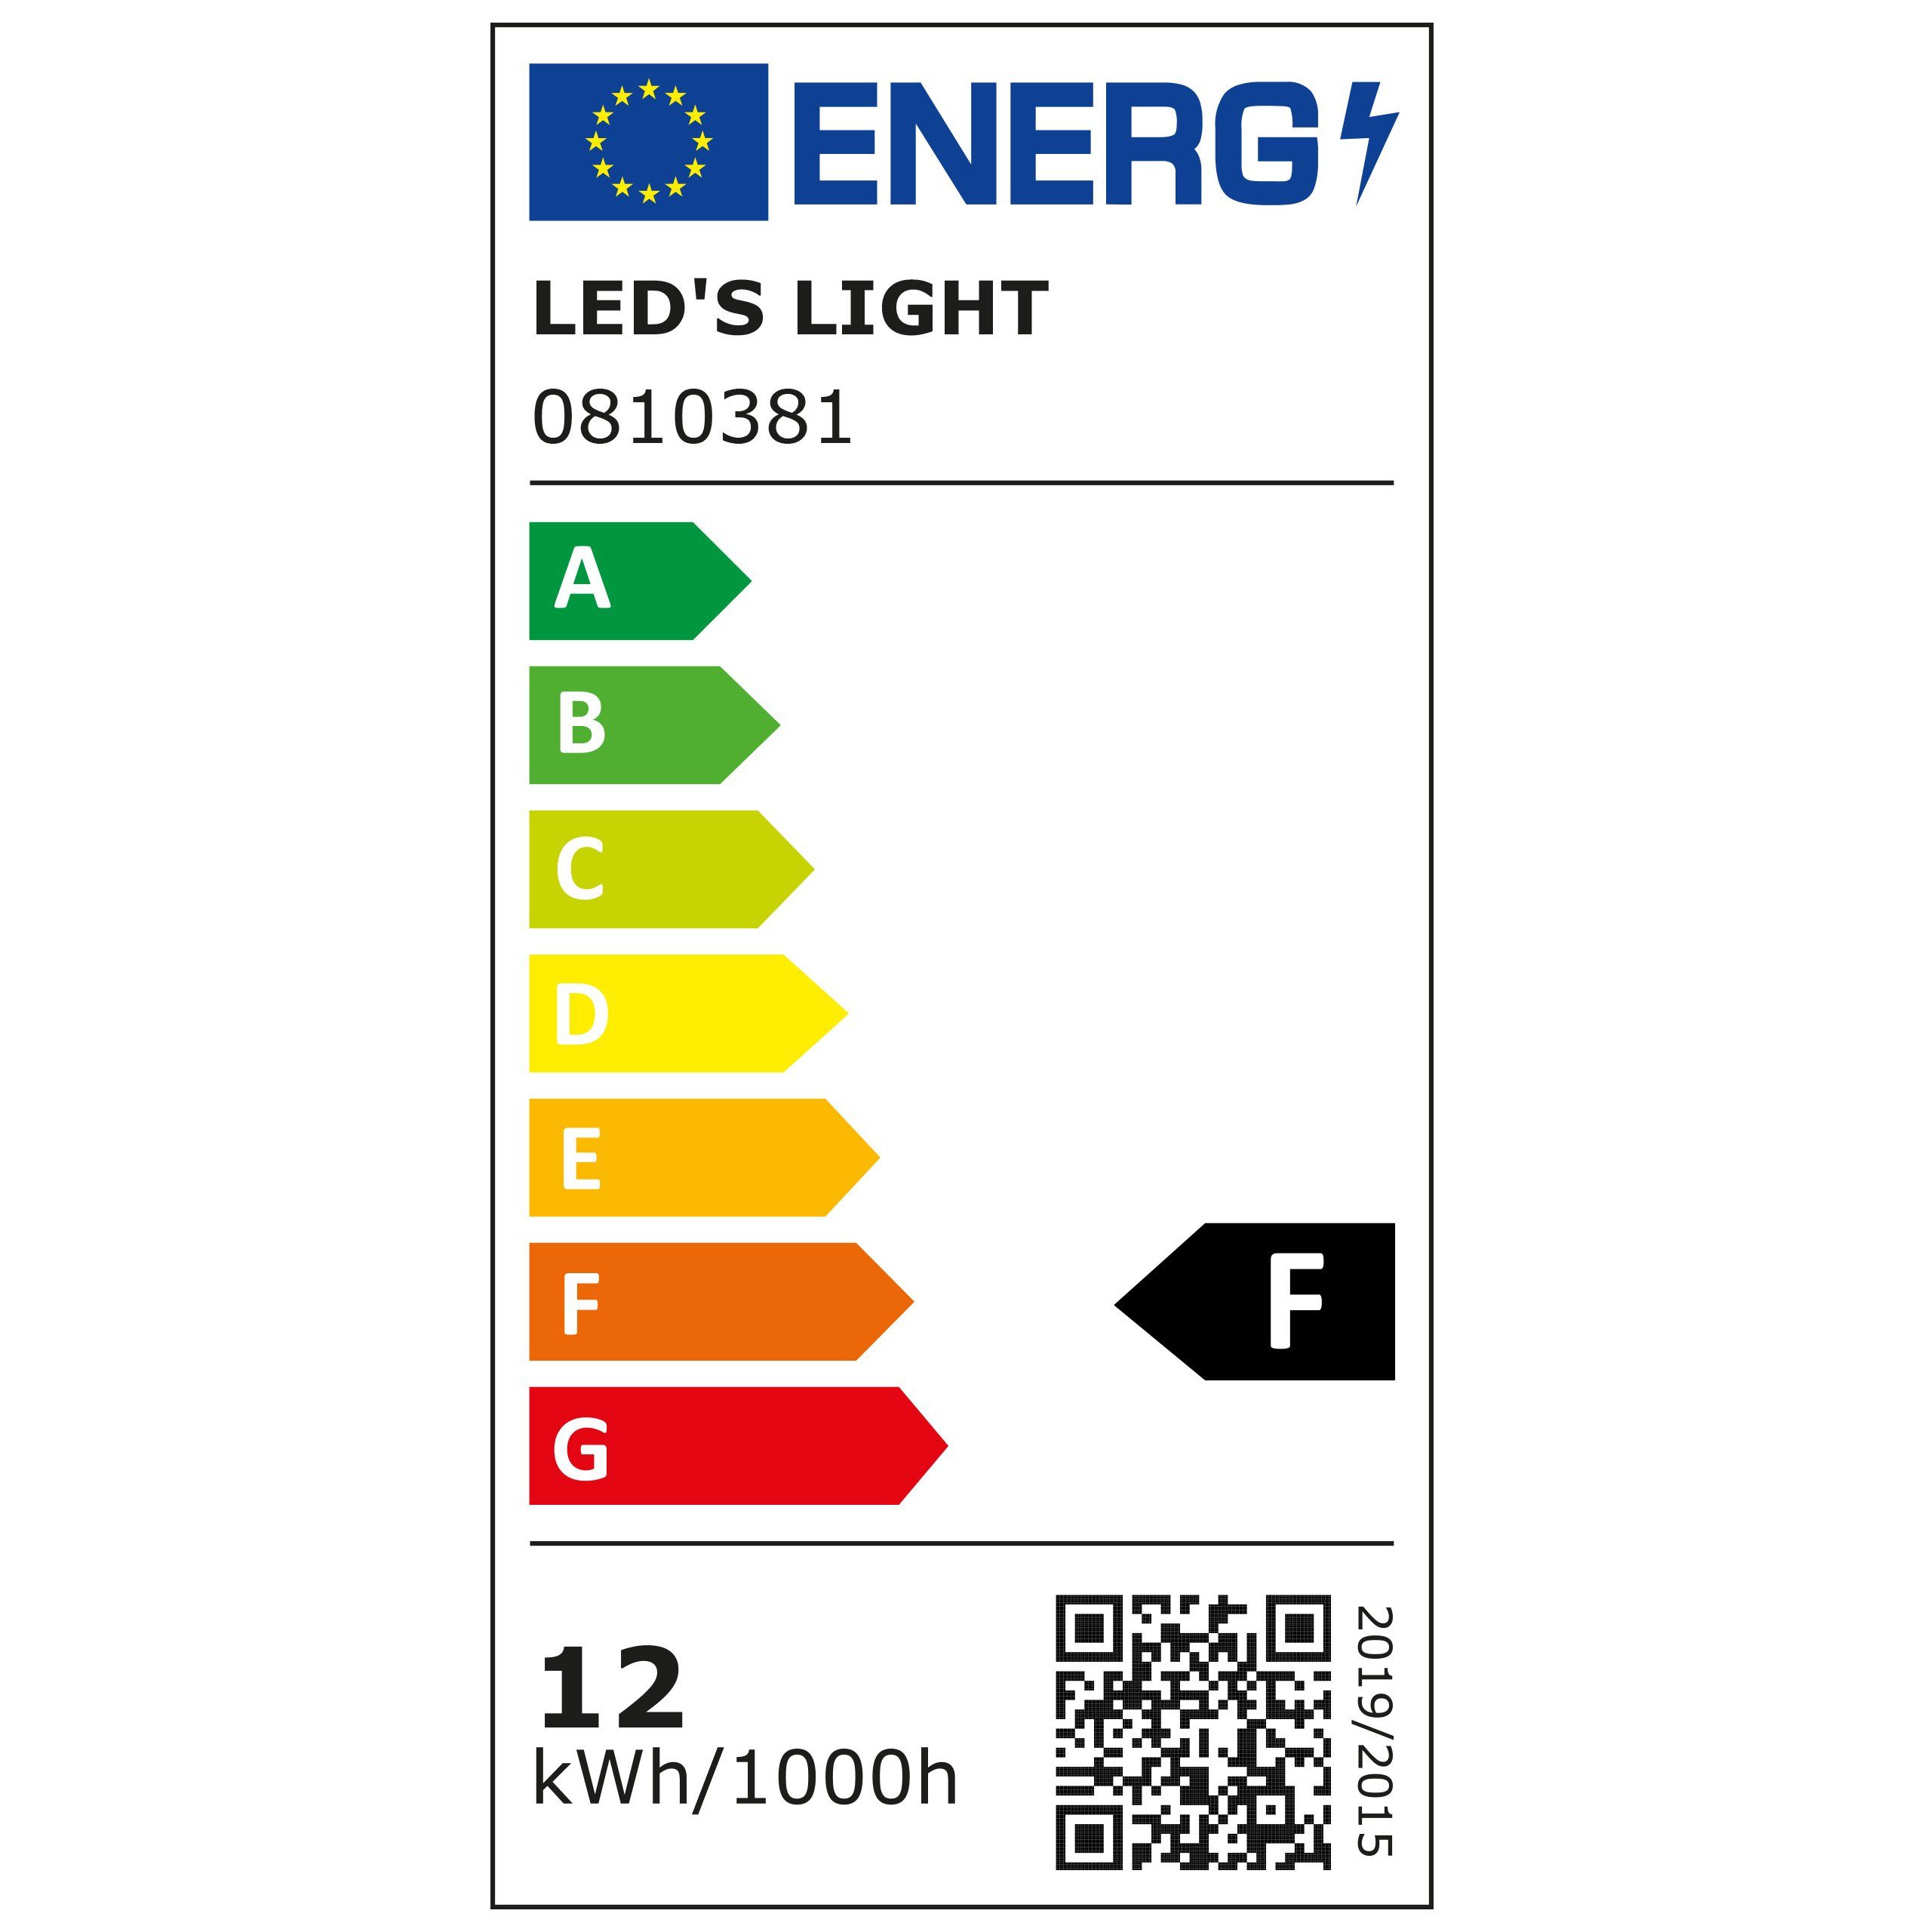 LED LED-Strahler, 12W CCT Unterputz LED, Aufputz LED's warm-neutral-kaltweiß Einbauleuchte light 18cm 0810381 dimmbar